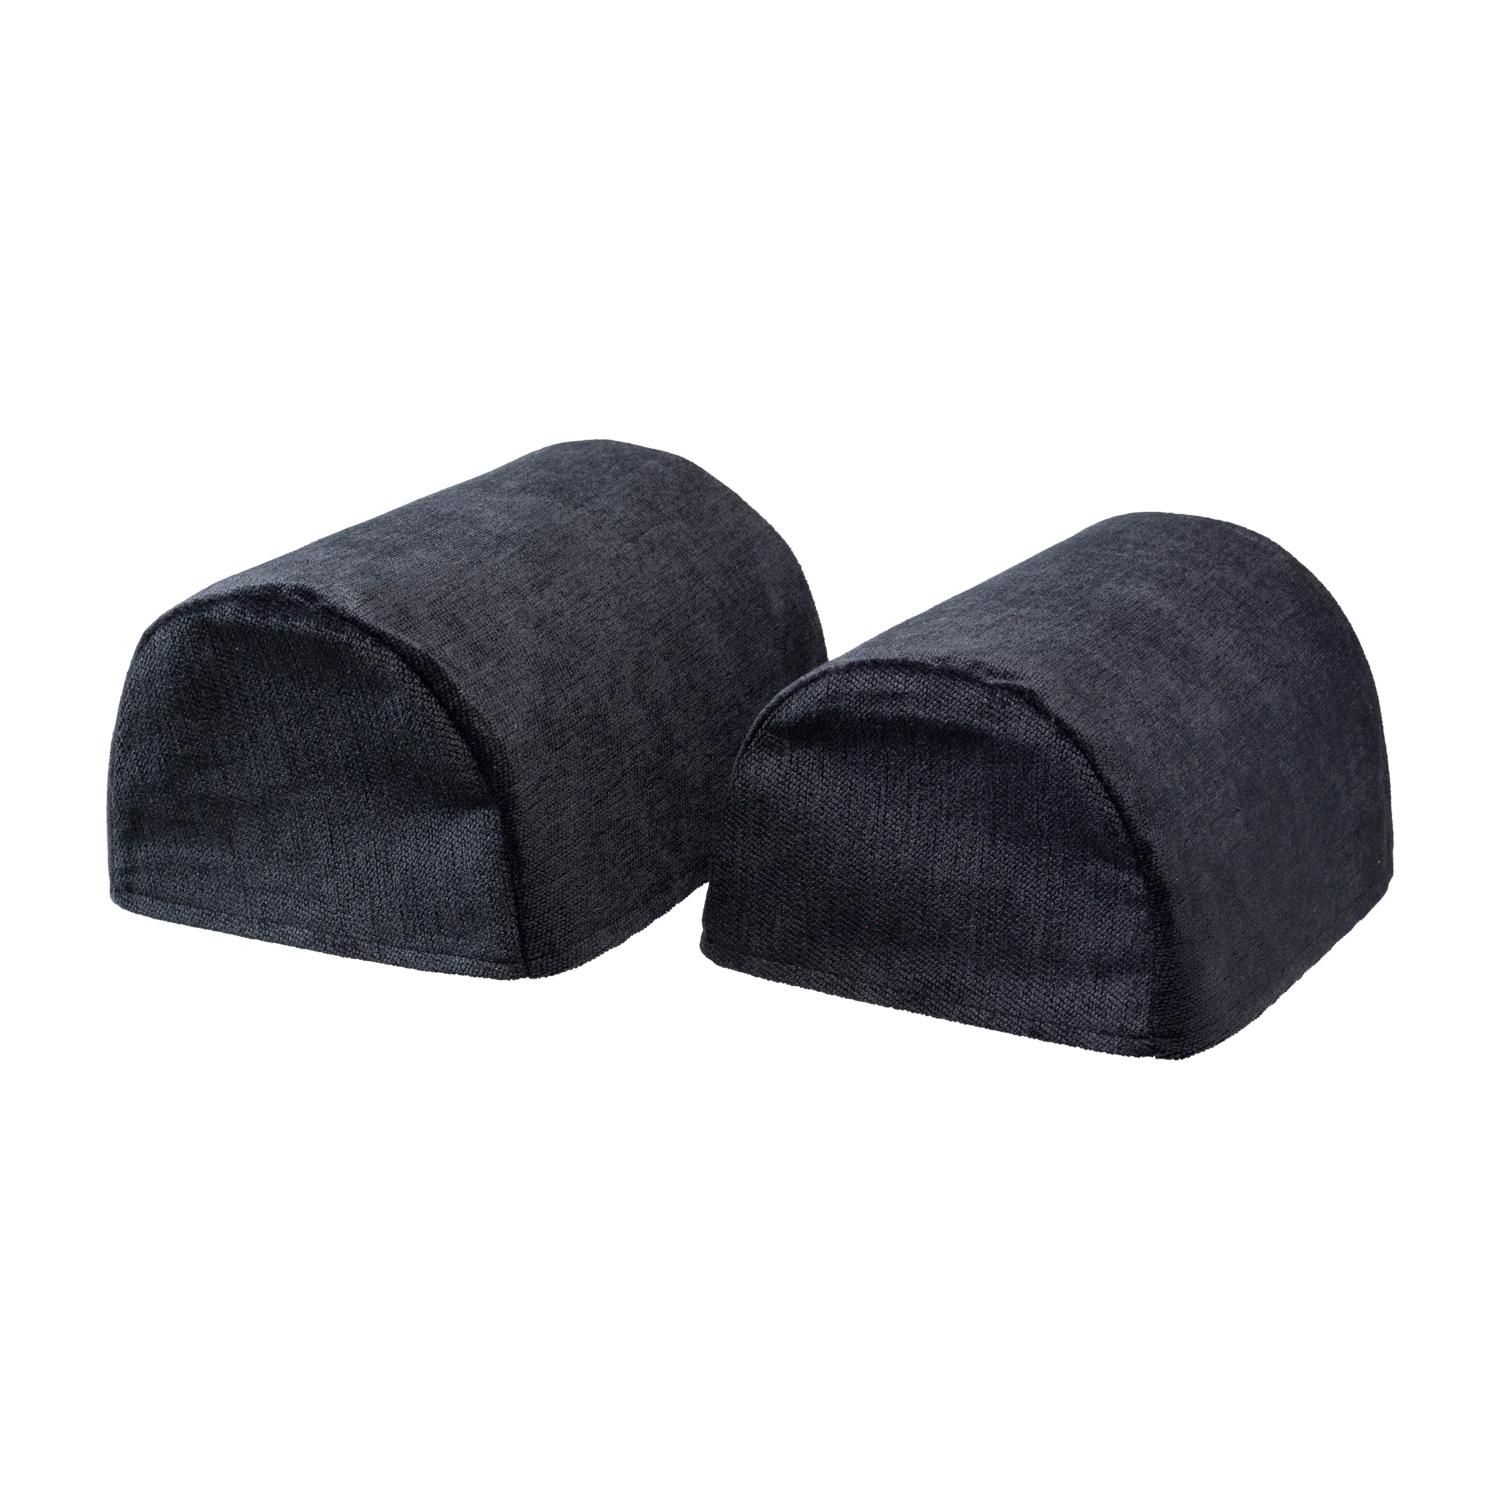 Chenille Round Arm Caps Plain Soft Touch Furniture Sofa Chair Inside Sofa Arm Caps (View 20 of 20)